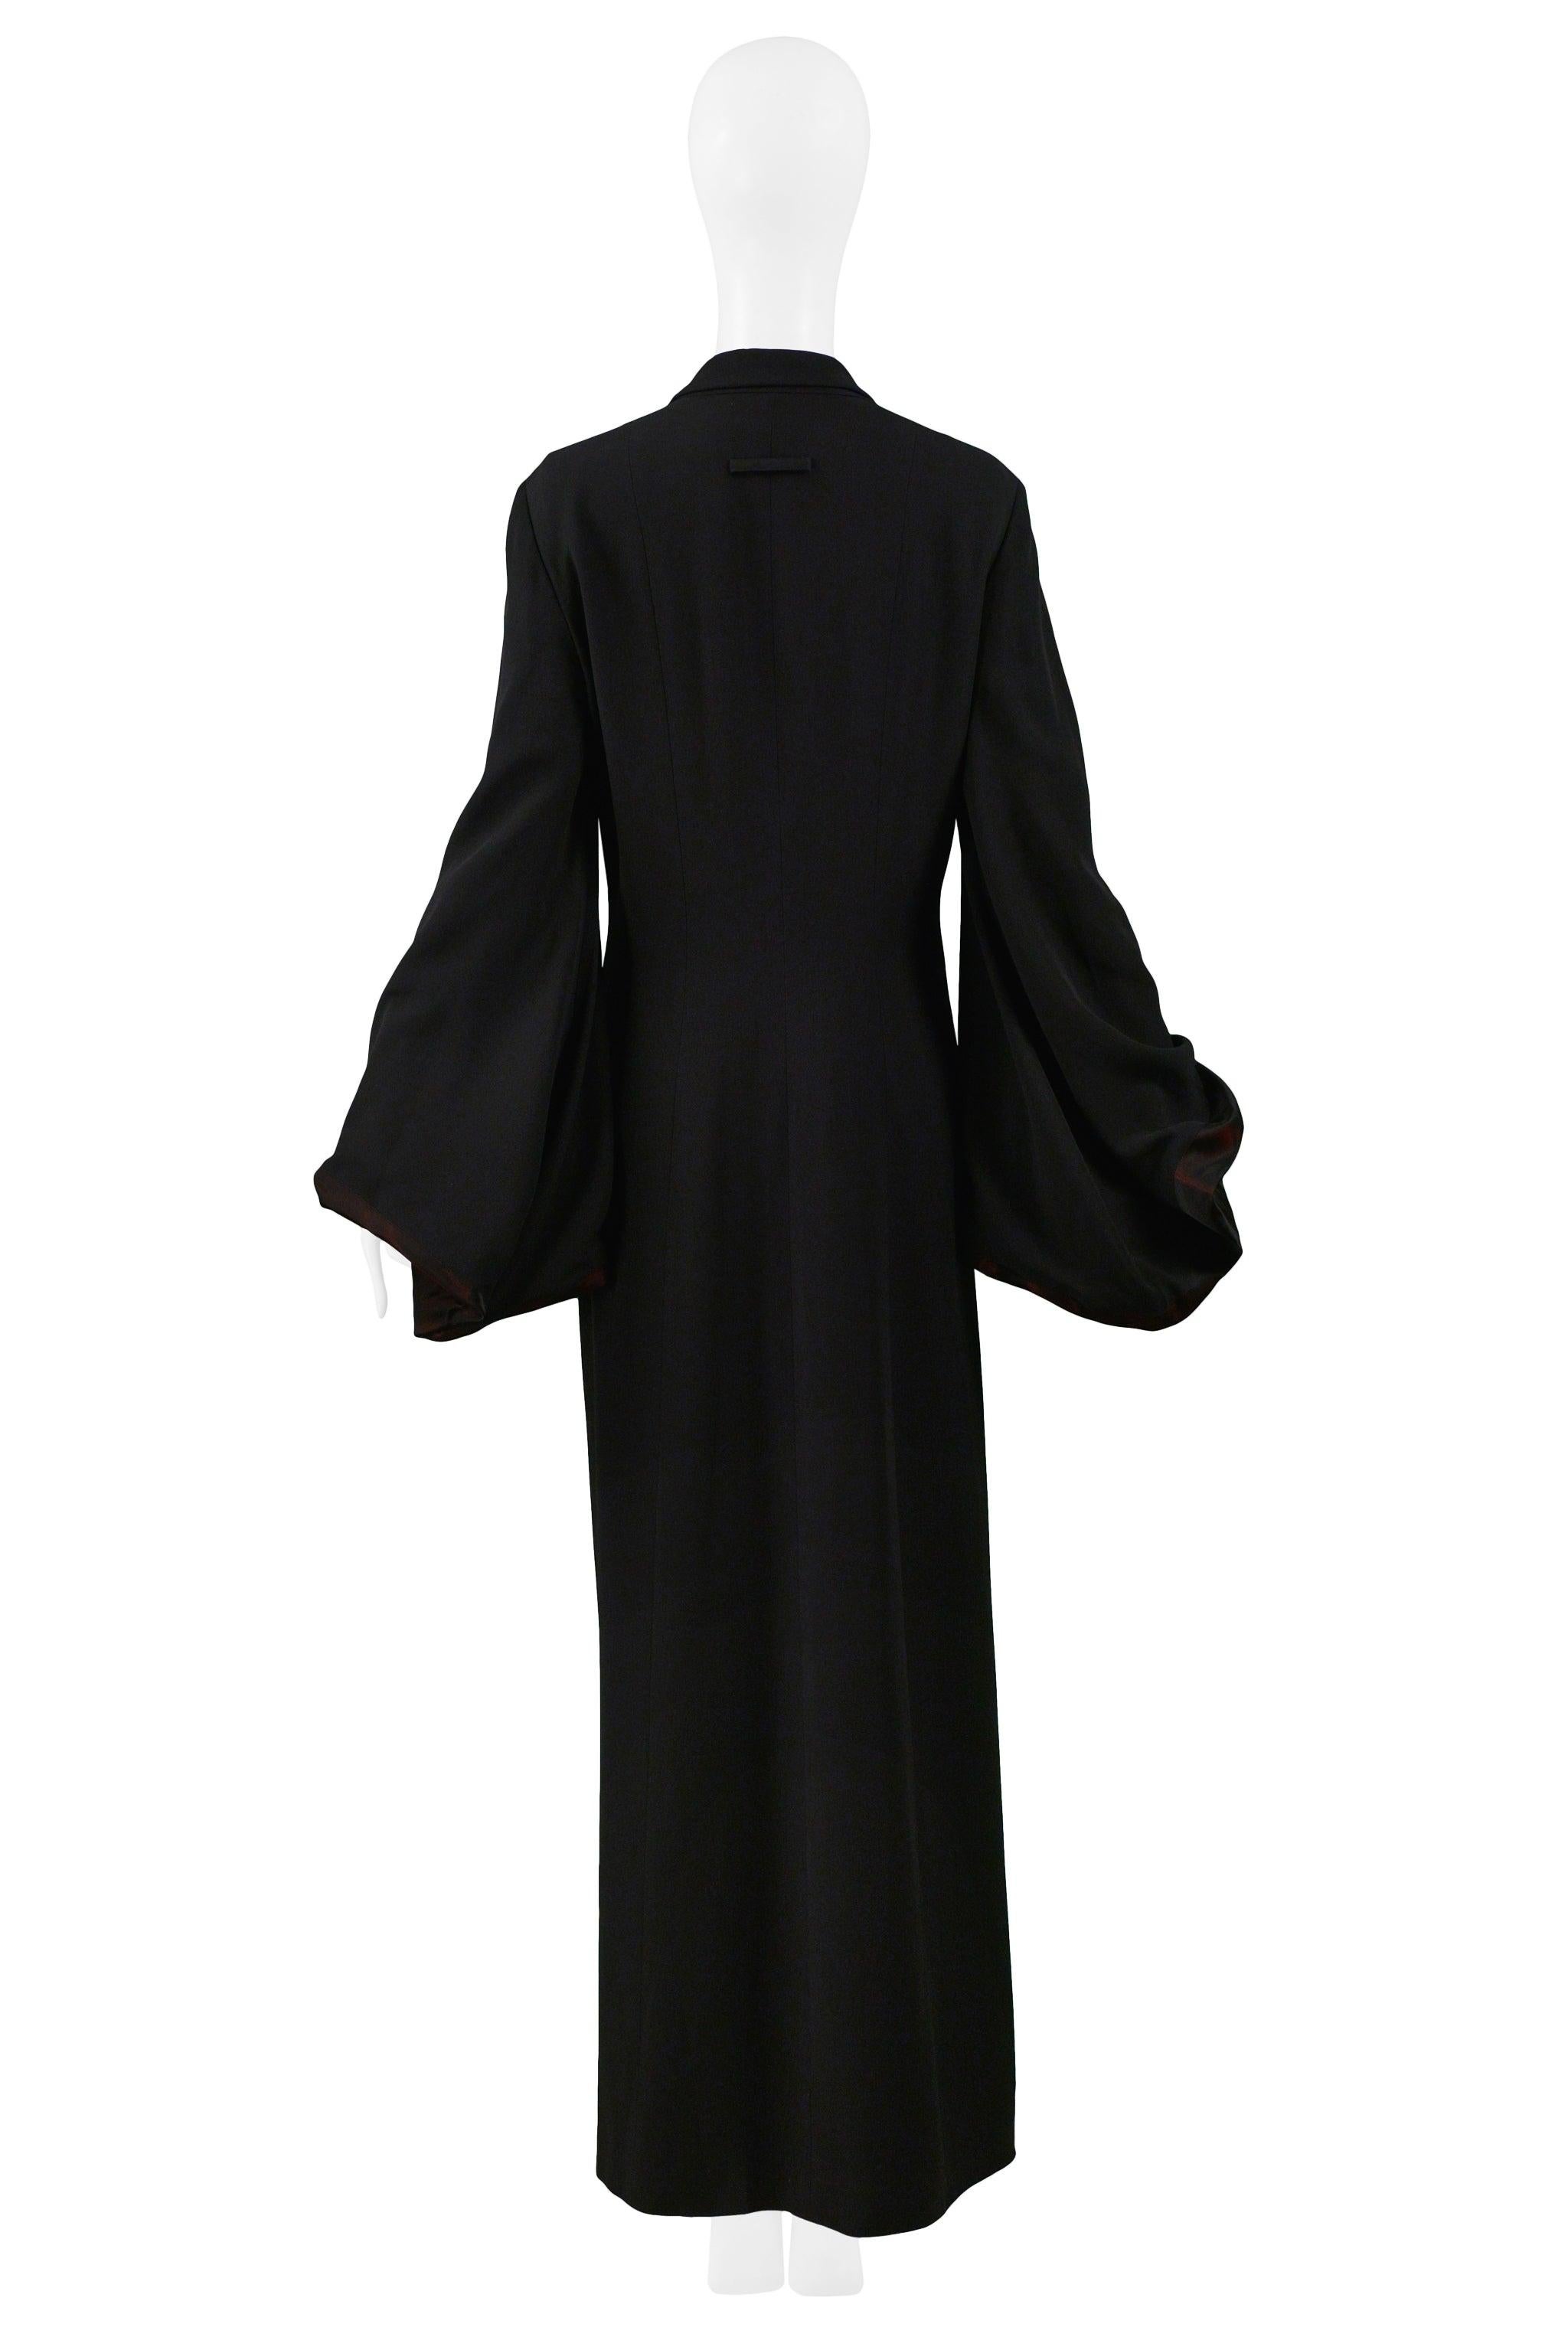 Jean Paul Gaultier Black Kimono Coat With Burgundy Taffeta Bubble Sleeves 2